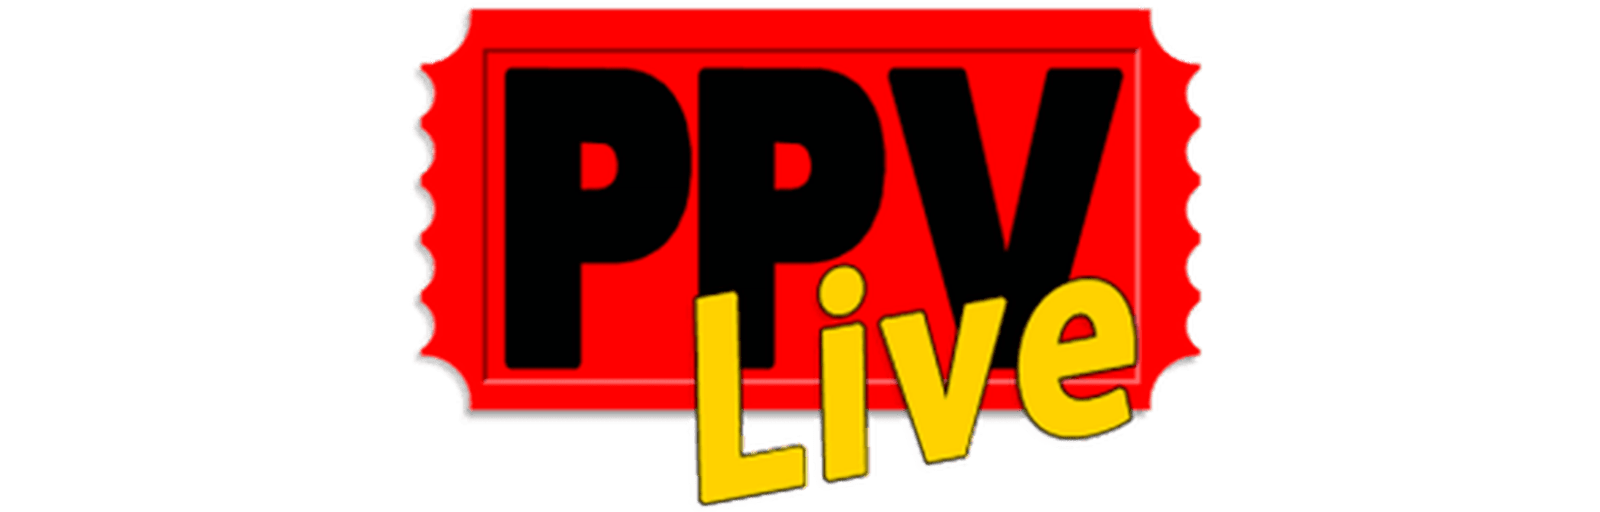 PPV live icon